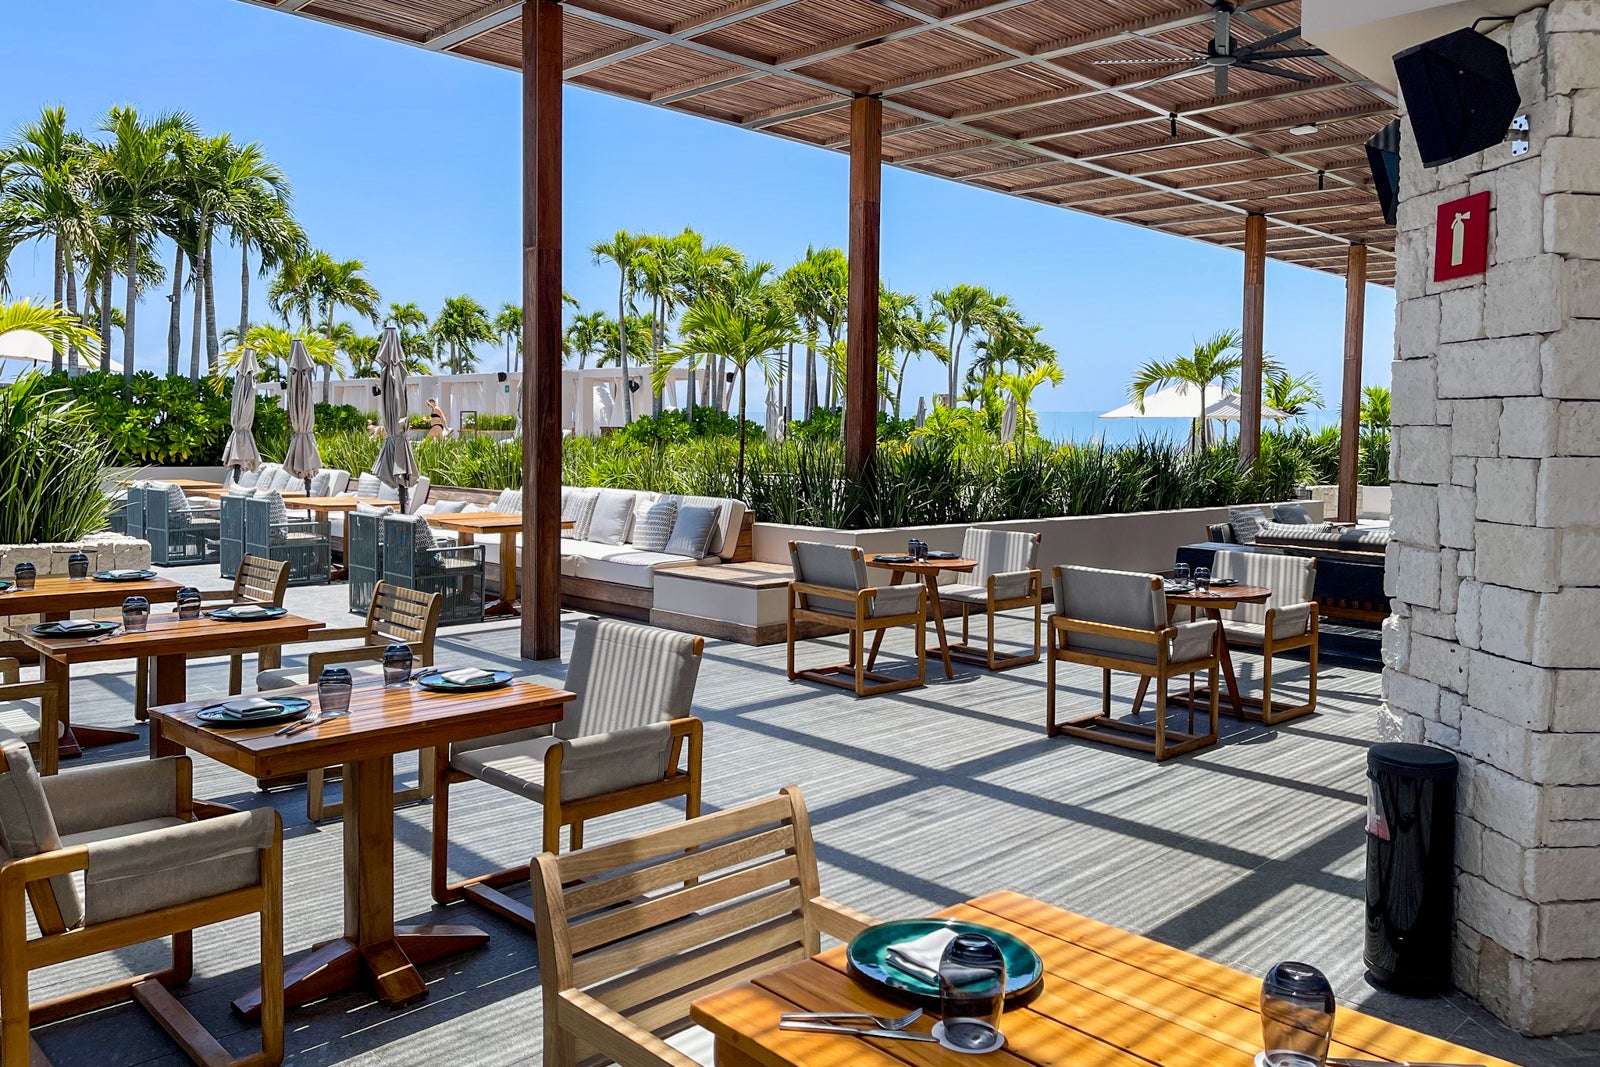 Seating at Cielo Impression Rooftop restaurant - Secrets Impression Moxche Playa del Carmen